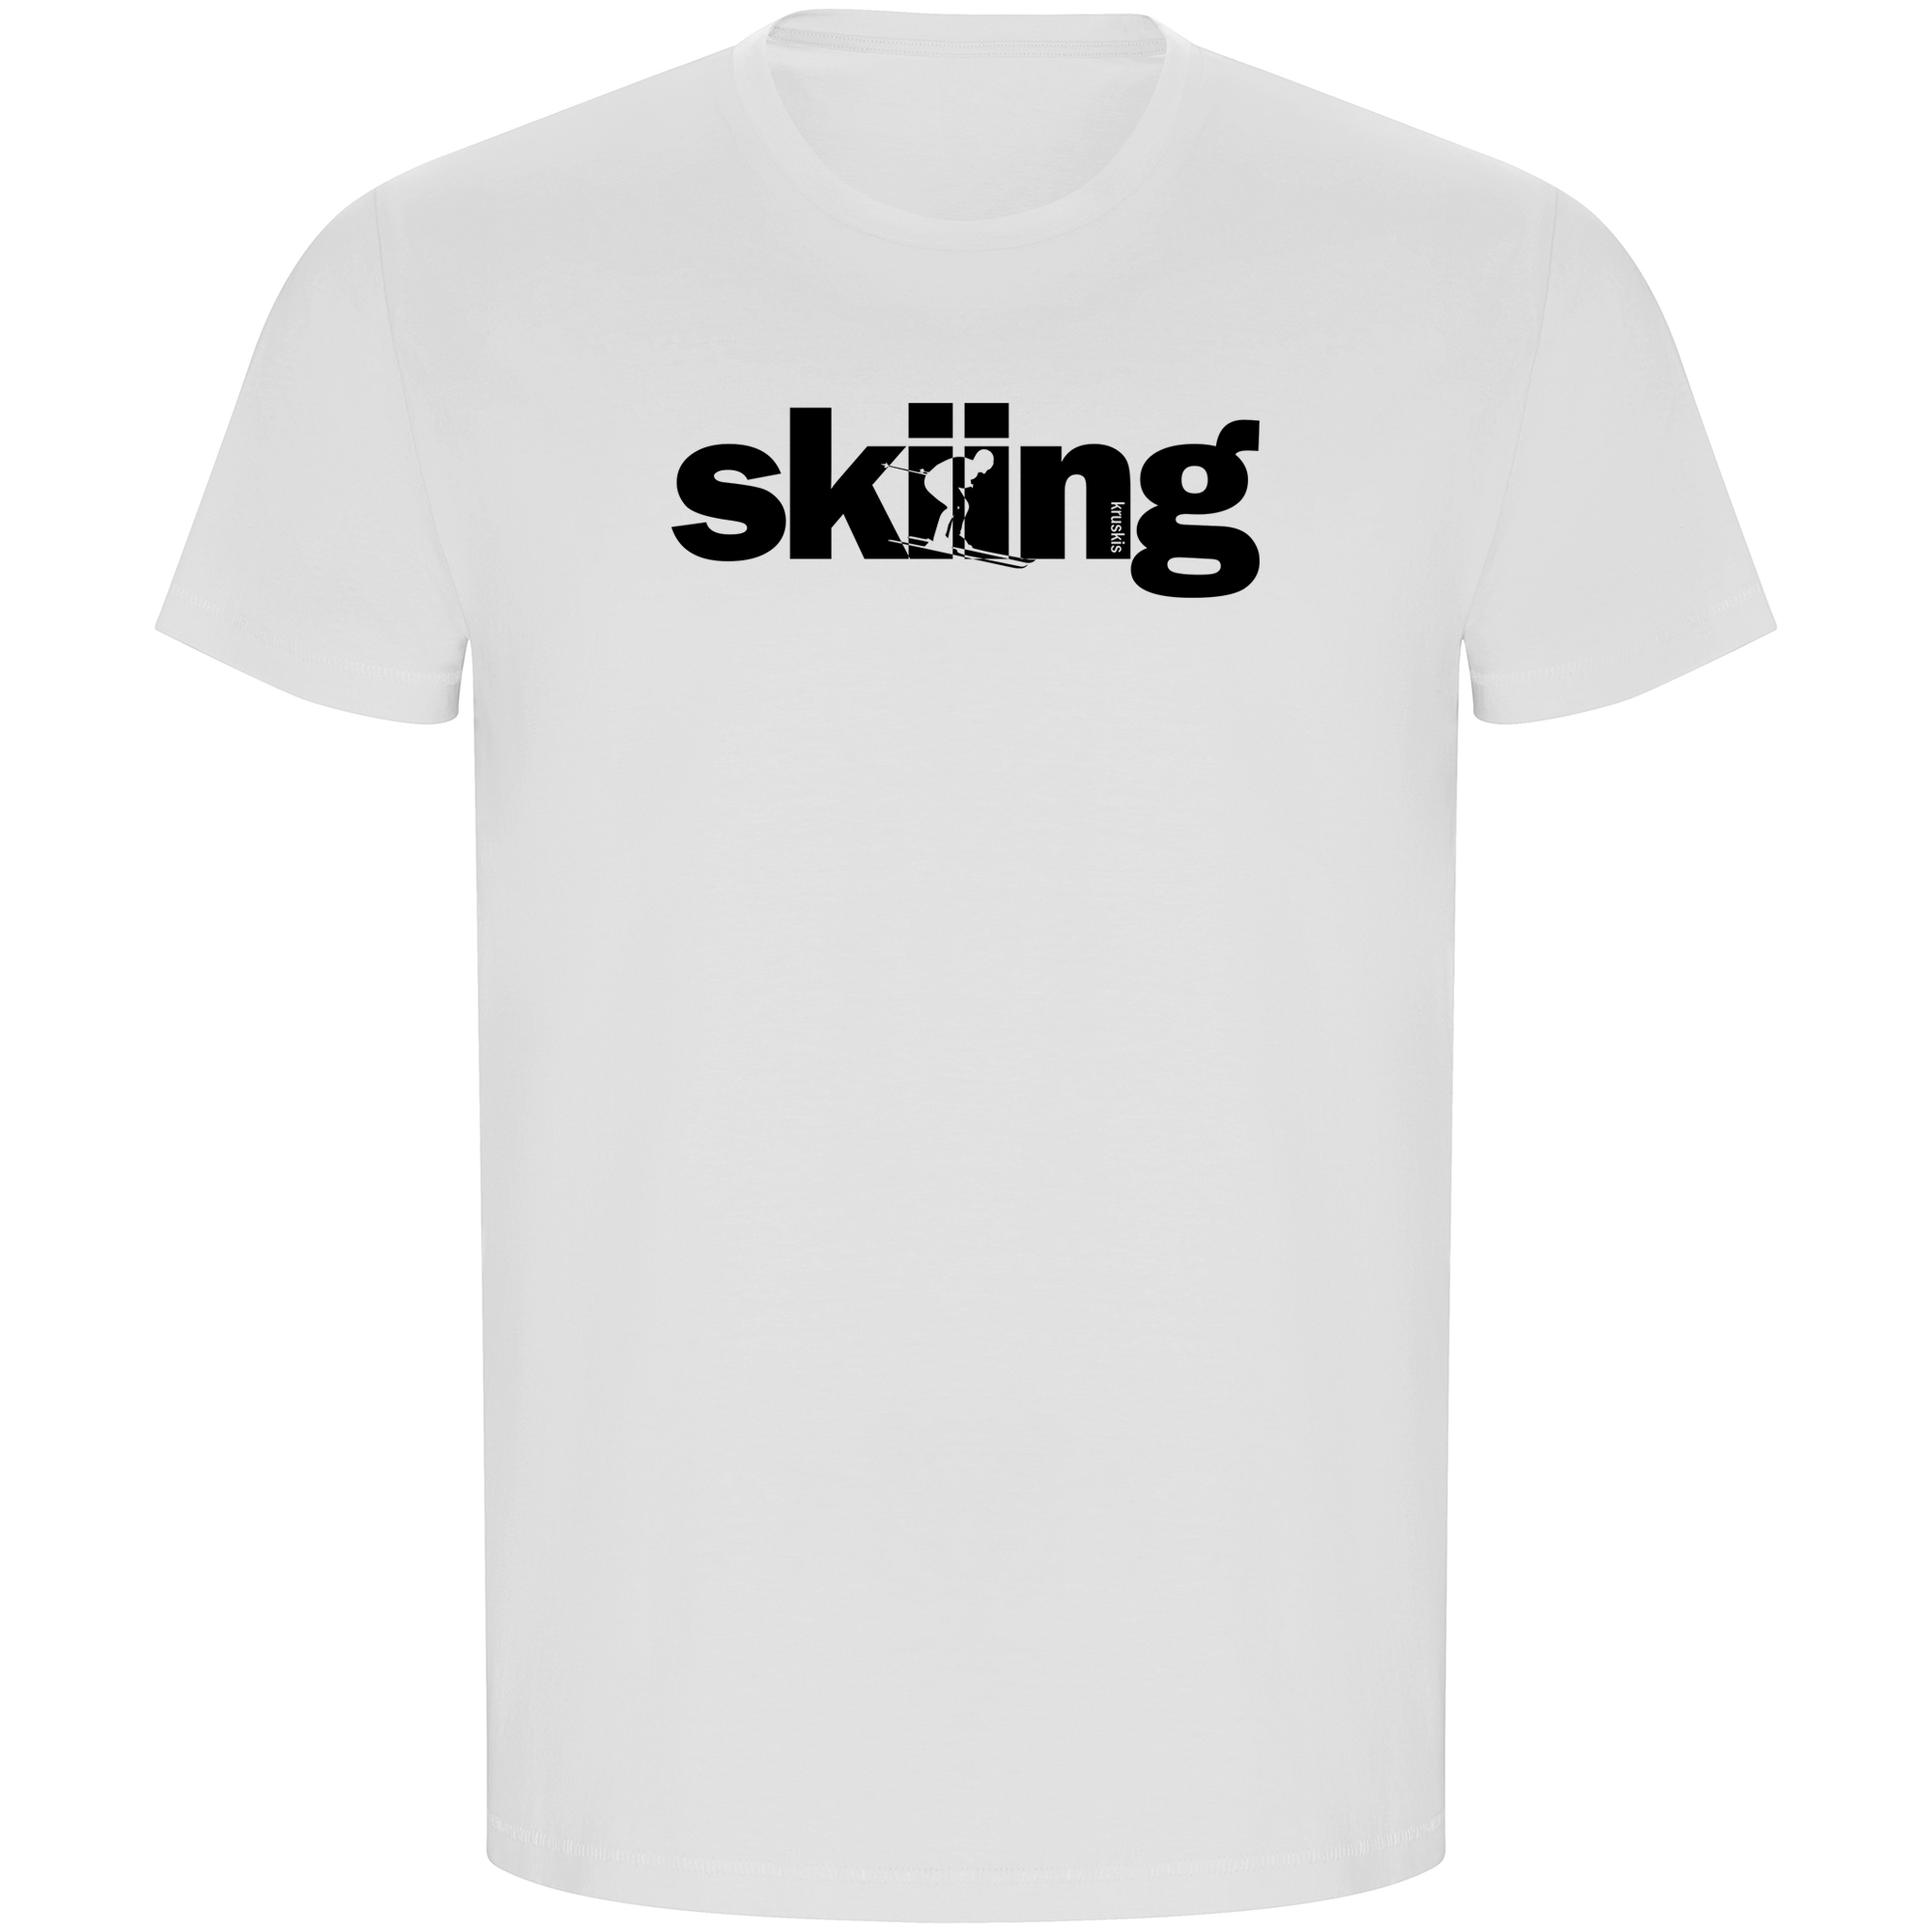 T Shirt ECO Ski Word Skiing Korte Mowen Man